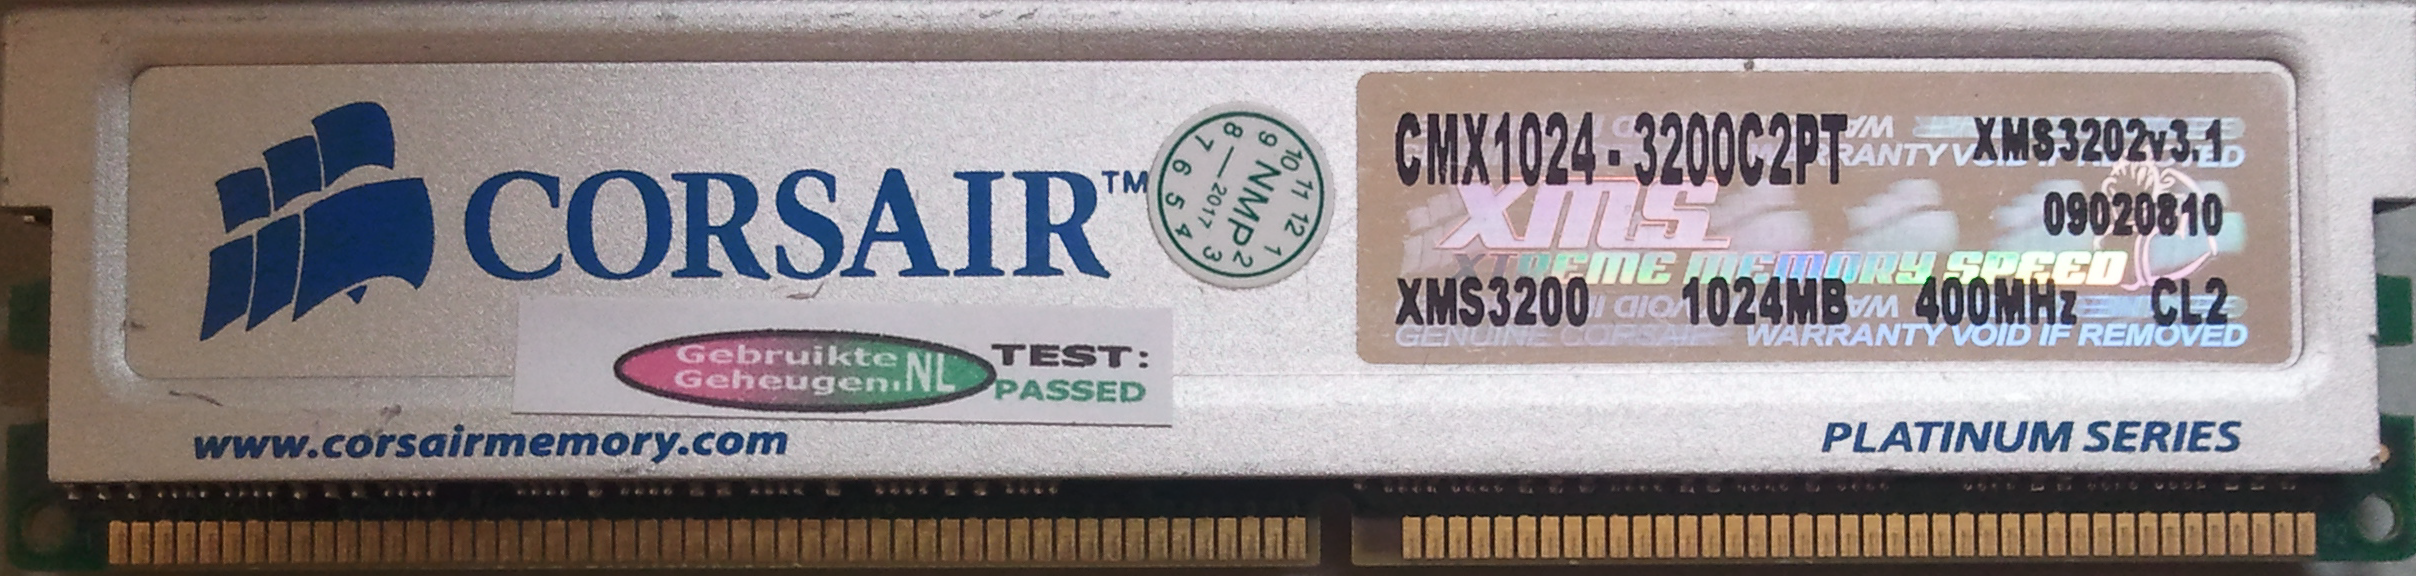 Corsair 1GB DDR PC3200U 400MHz